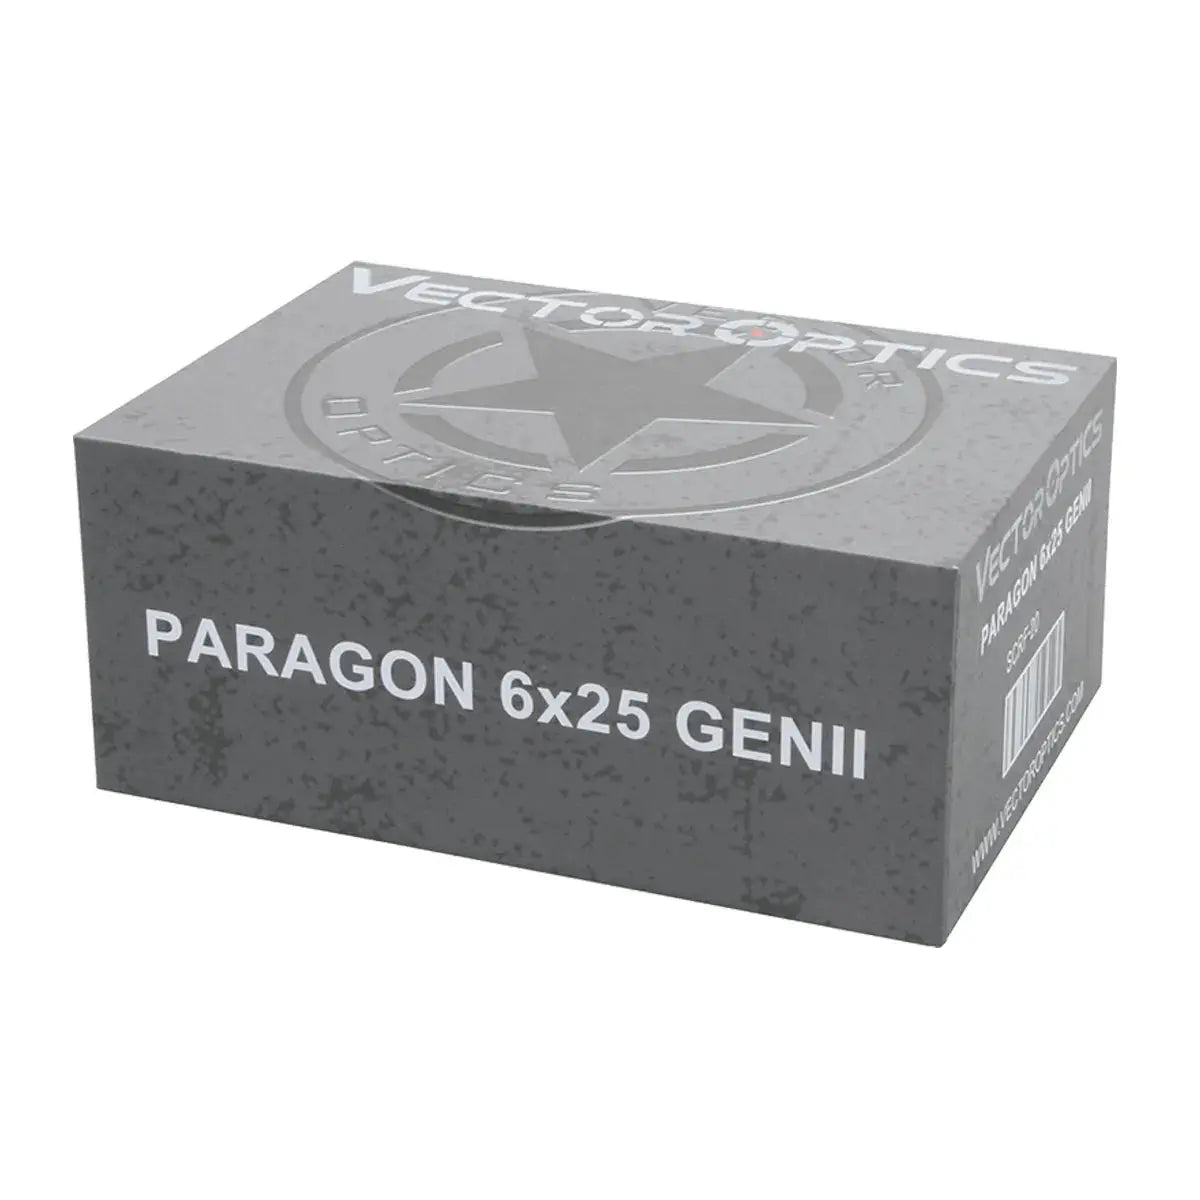 PARAGON 6x25 LCD RANGEFINDER GENII 2000 Yards Vector Optics